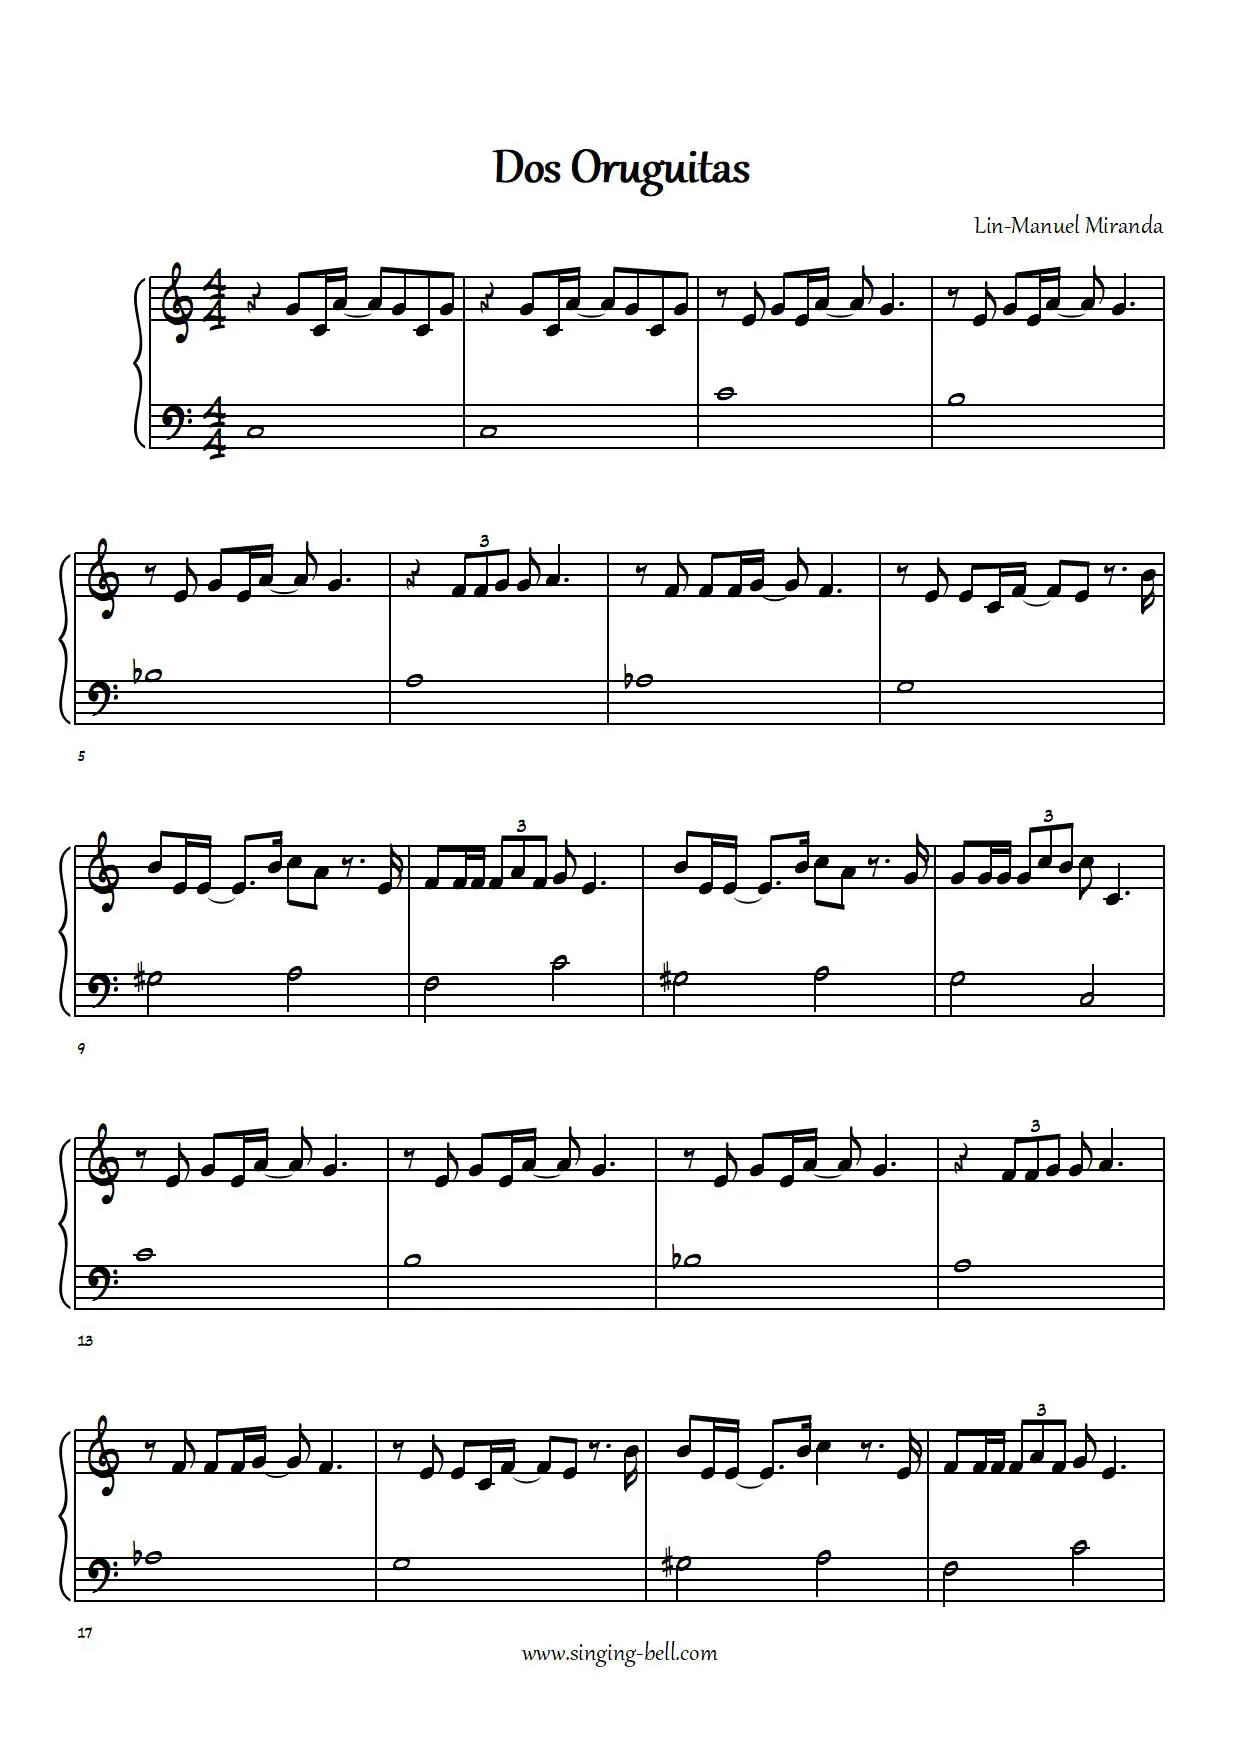 Dos_Oruguitas easy piano sheet music p.1 notes chords beginners pdf